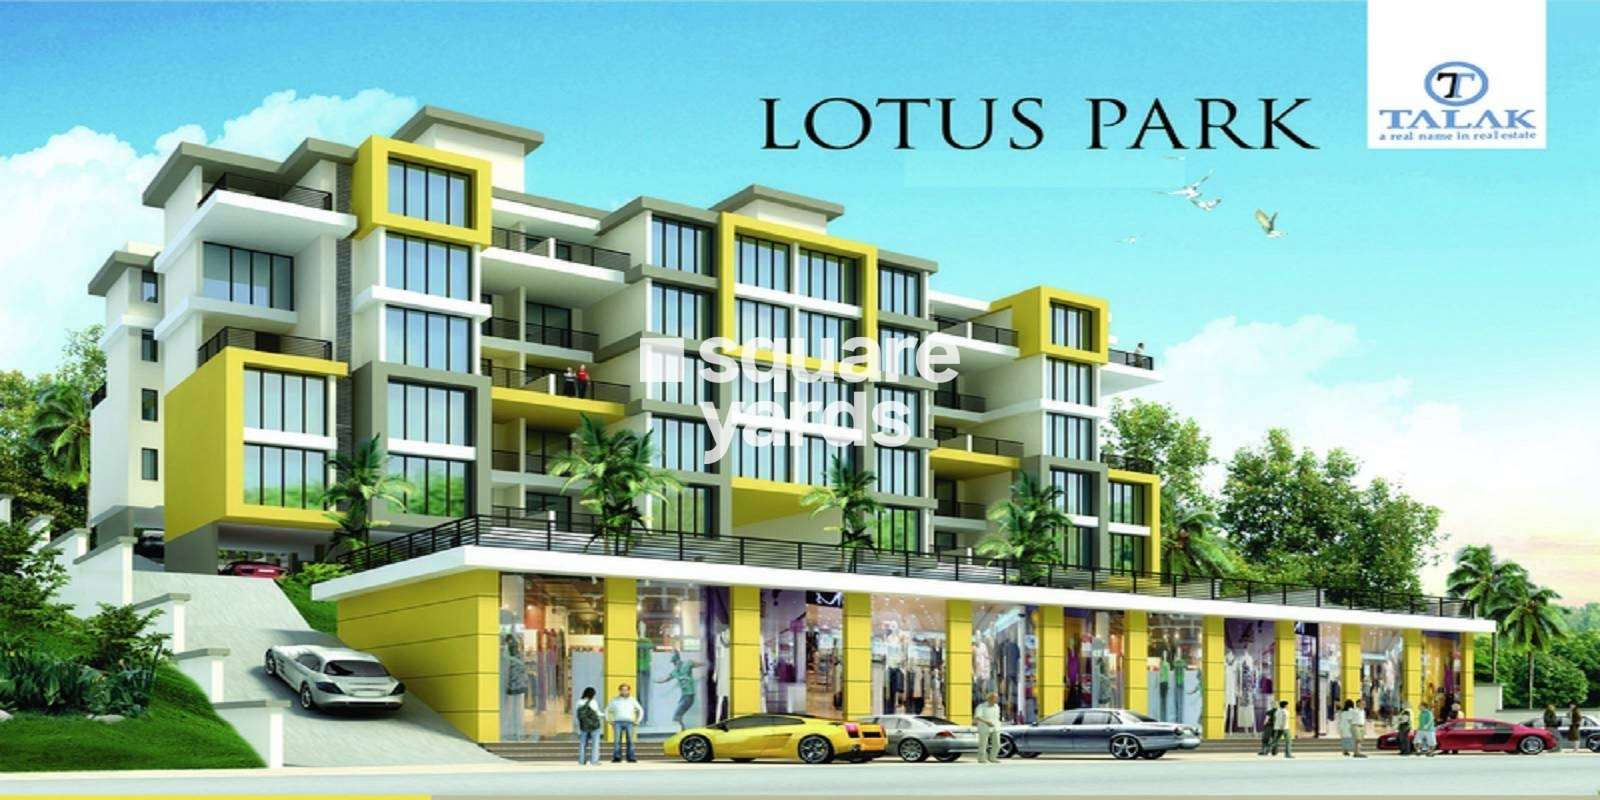 Talak Lotus Park Cover Image